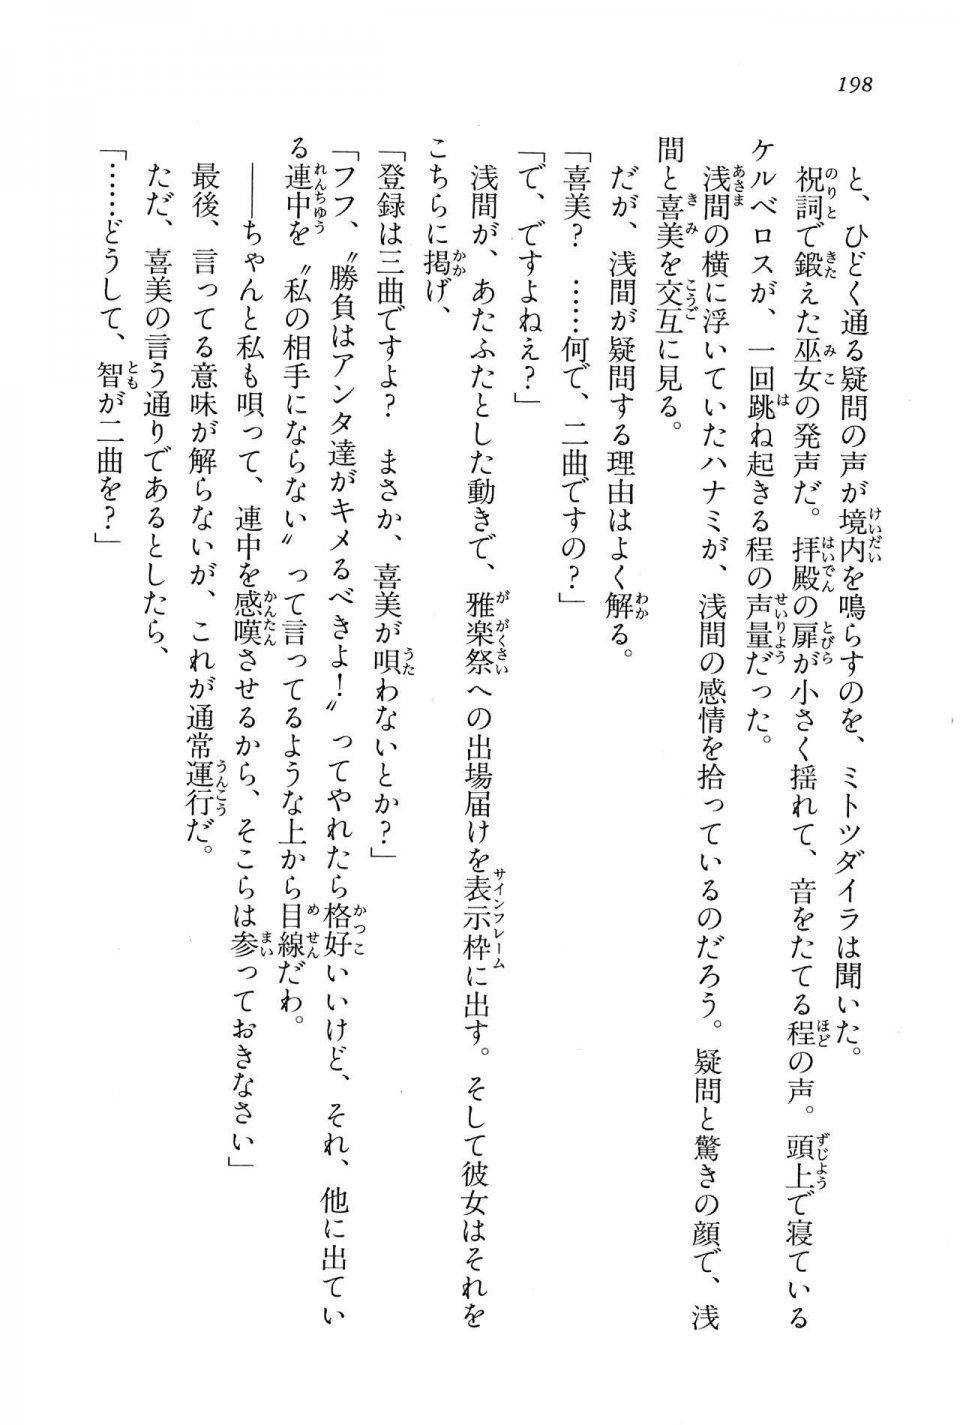 Kyoukai Senjou no Horizon BD Special Mininovel Vol 6(3B) - Photo #202